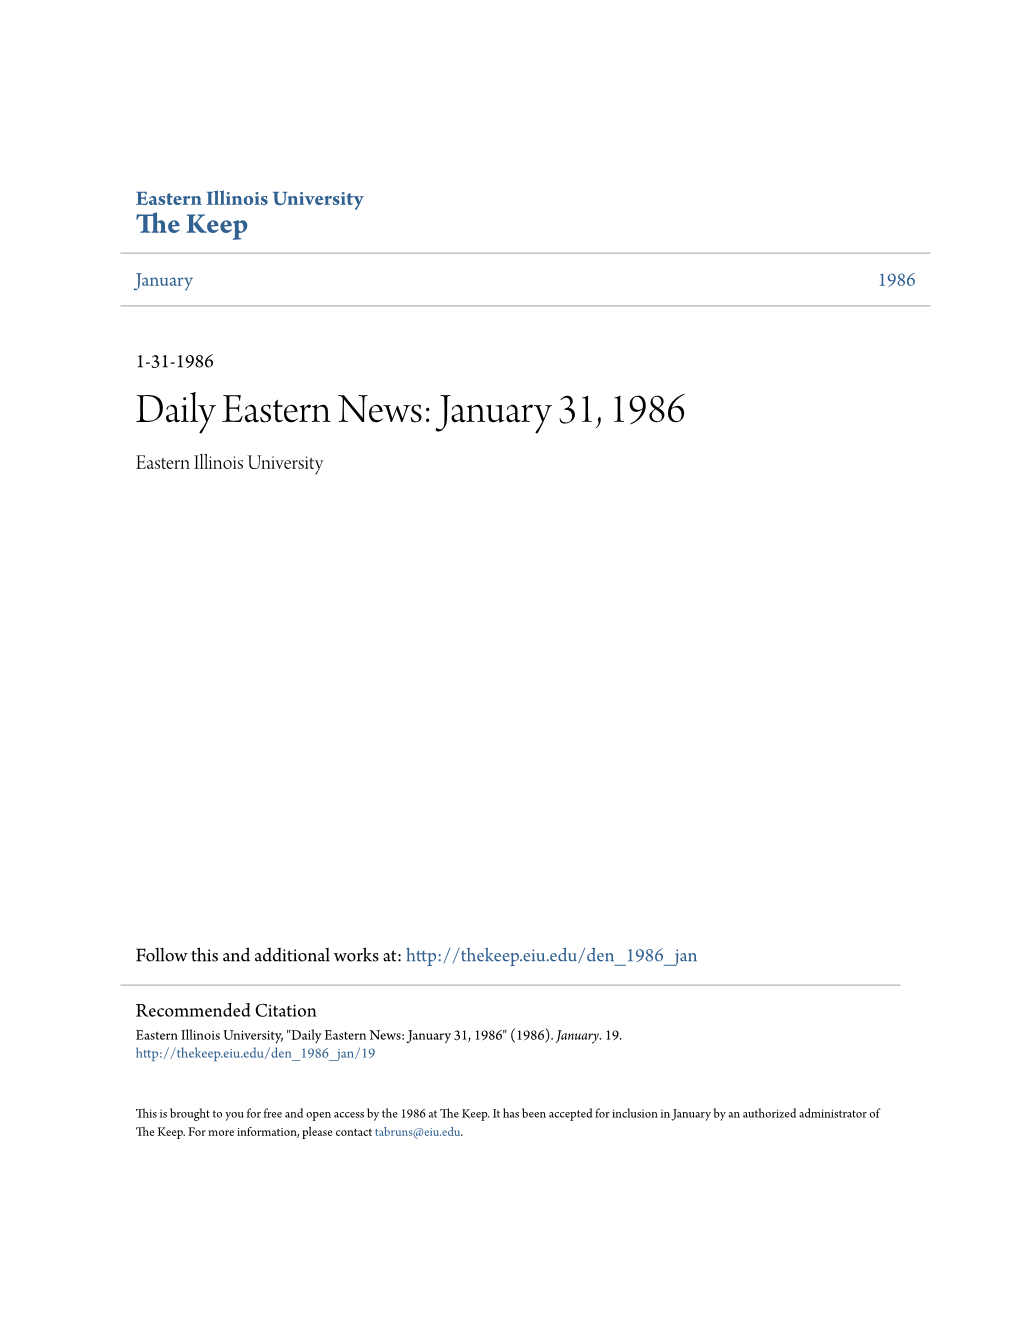 Daily Eastern News: January 31, 1986 Eastern Illinois University